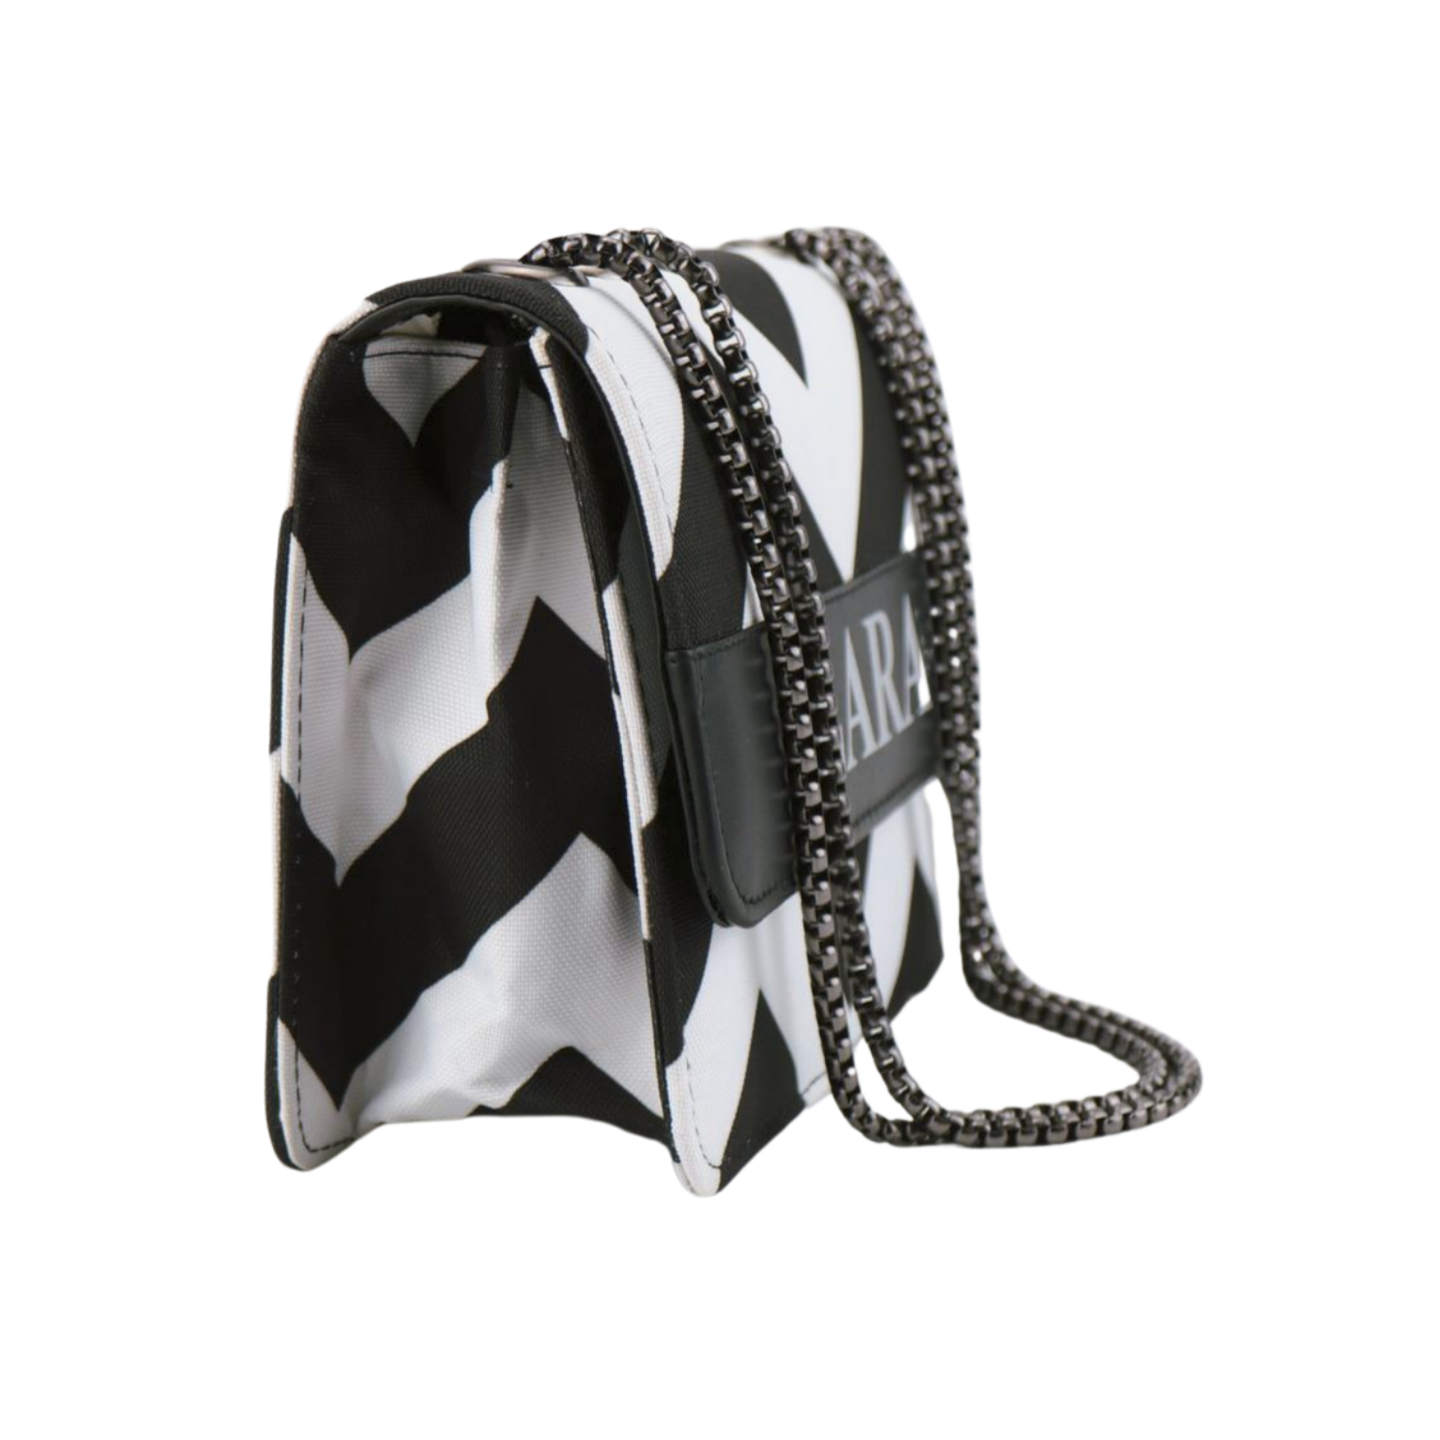 Zebra Print Striped Crossbody Bag with Chain Strap